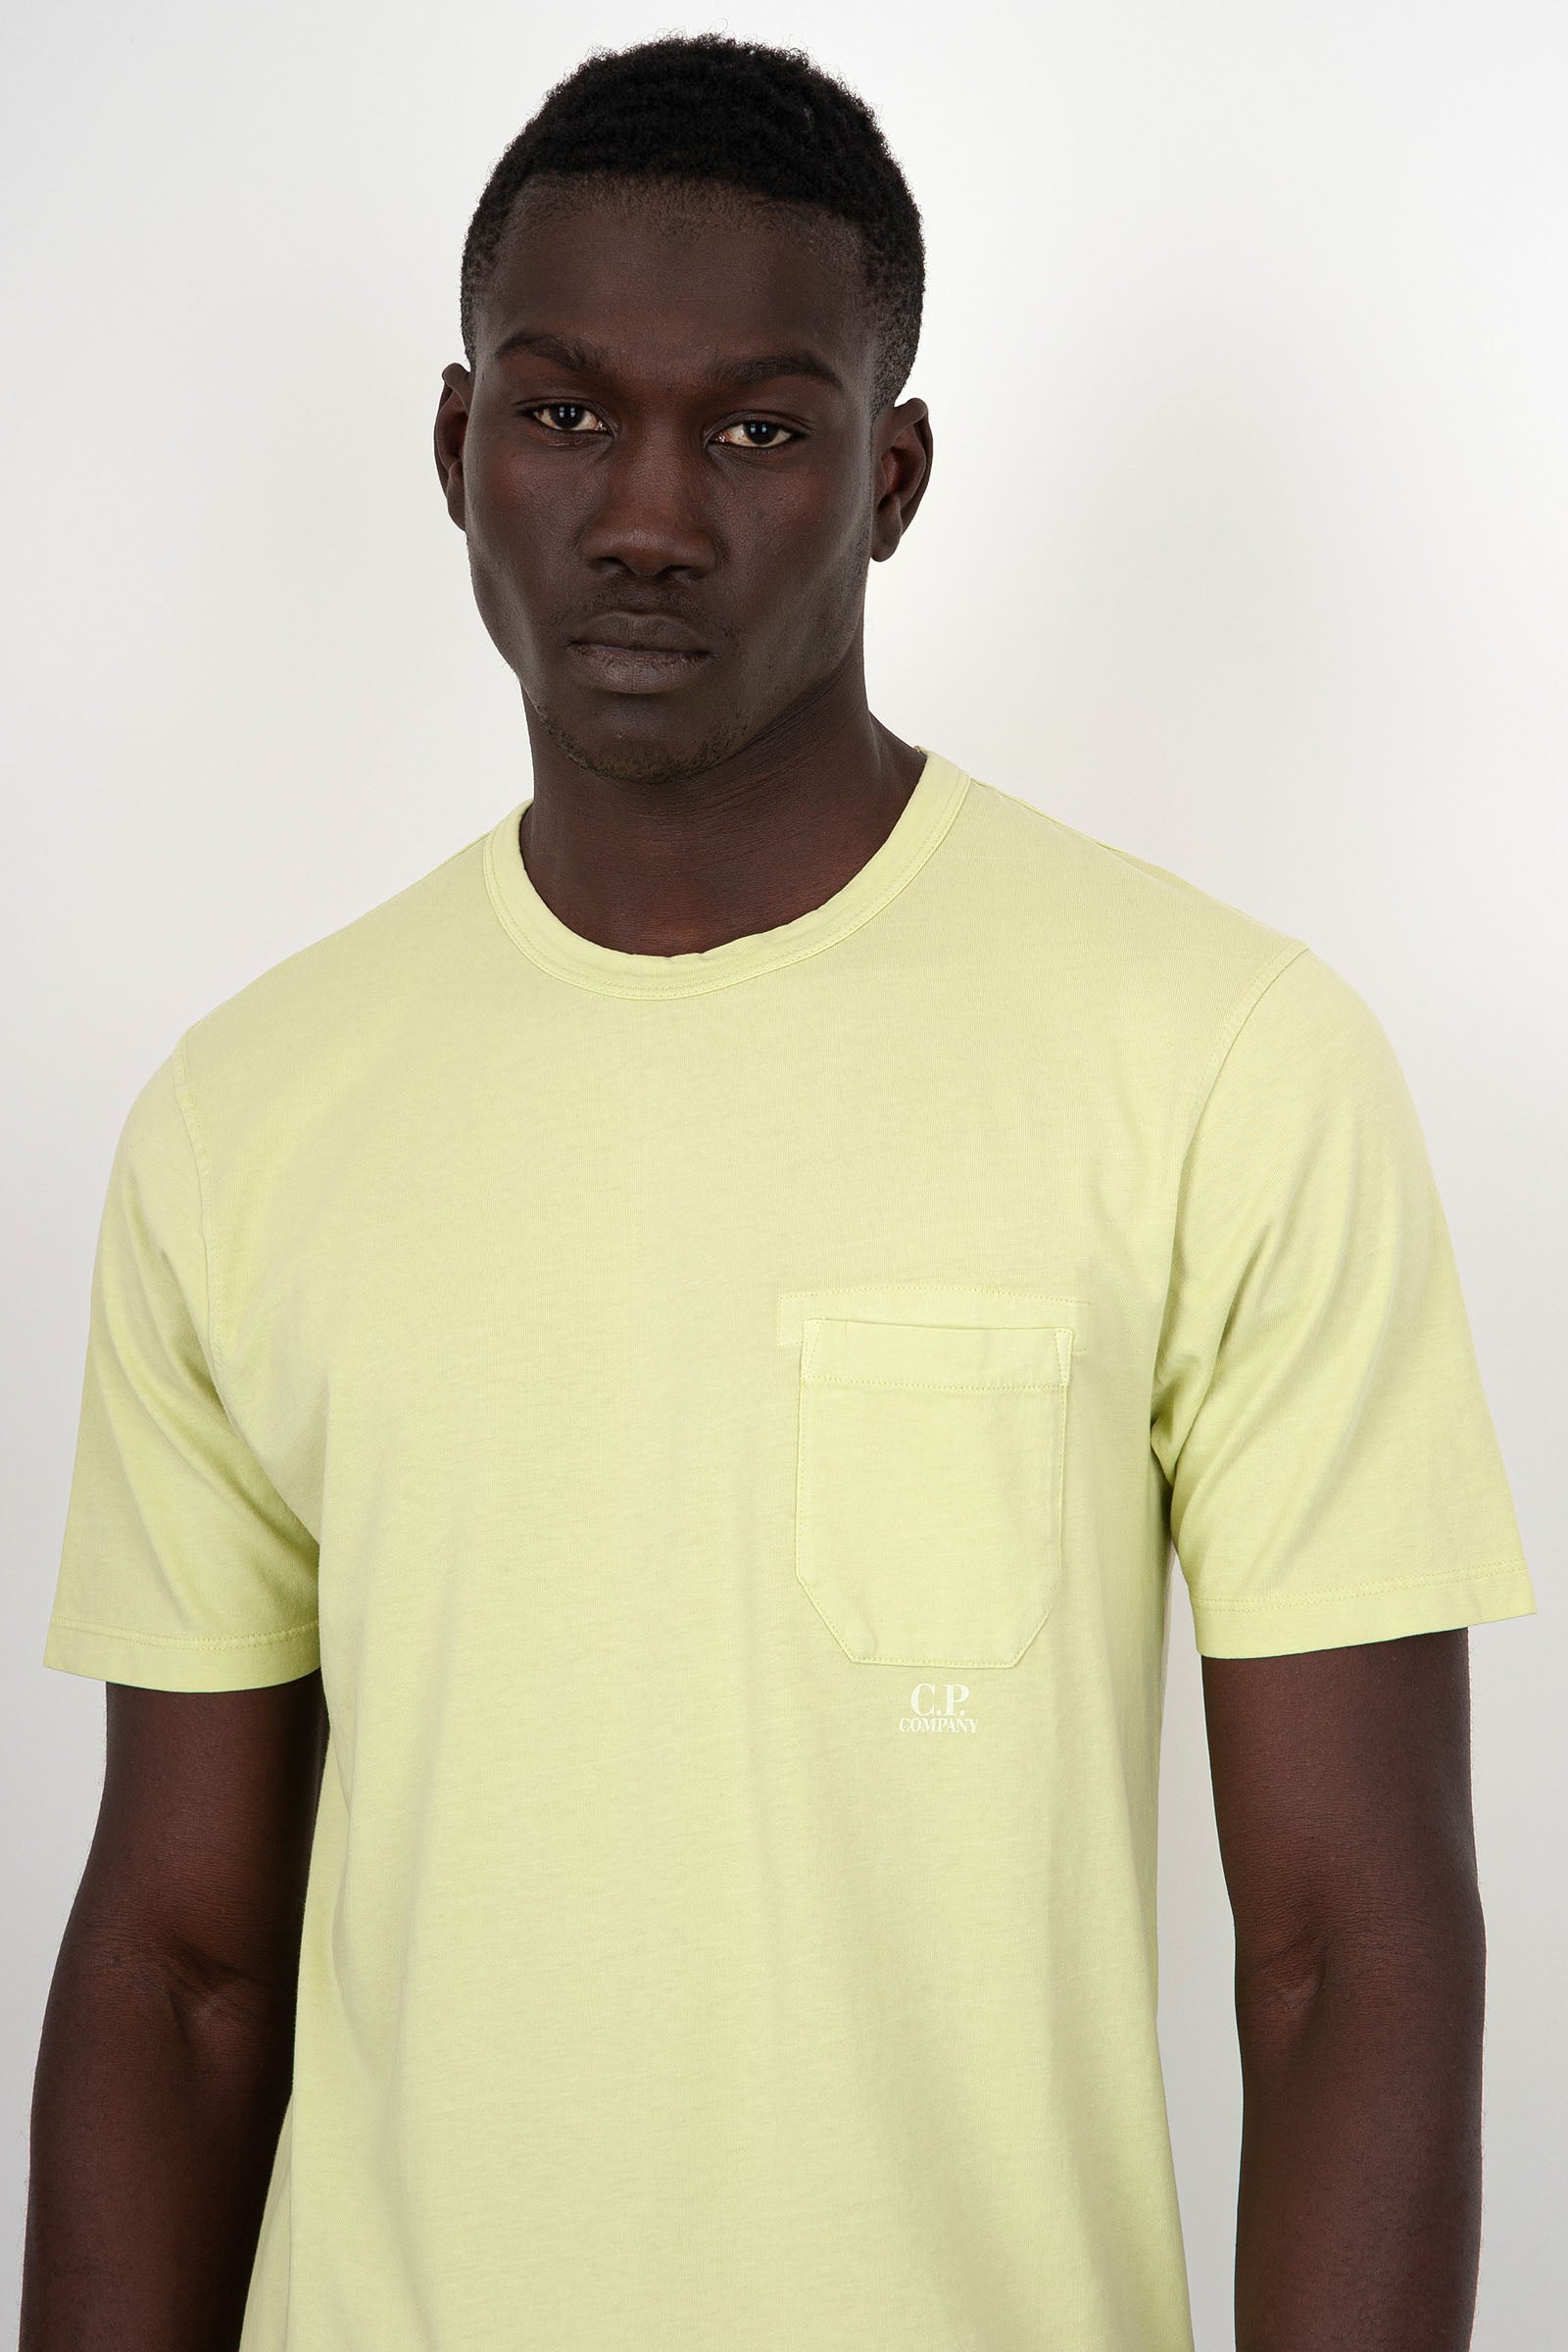 C.P. Company T-Shirt 24/1 Jersey Resist Dye Pocket Light Green - 1